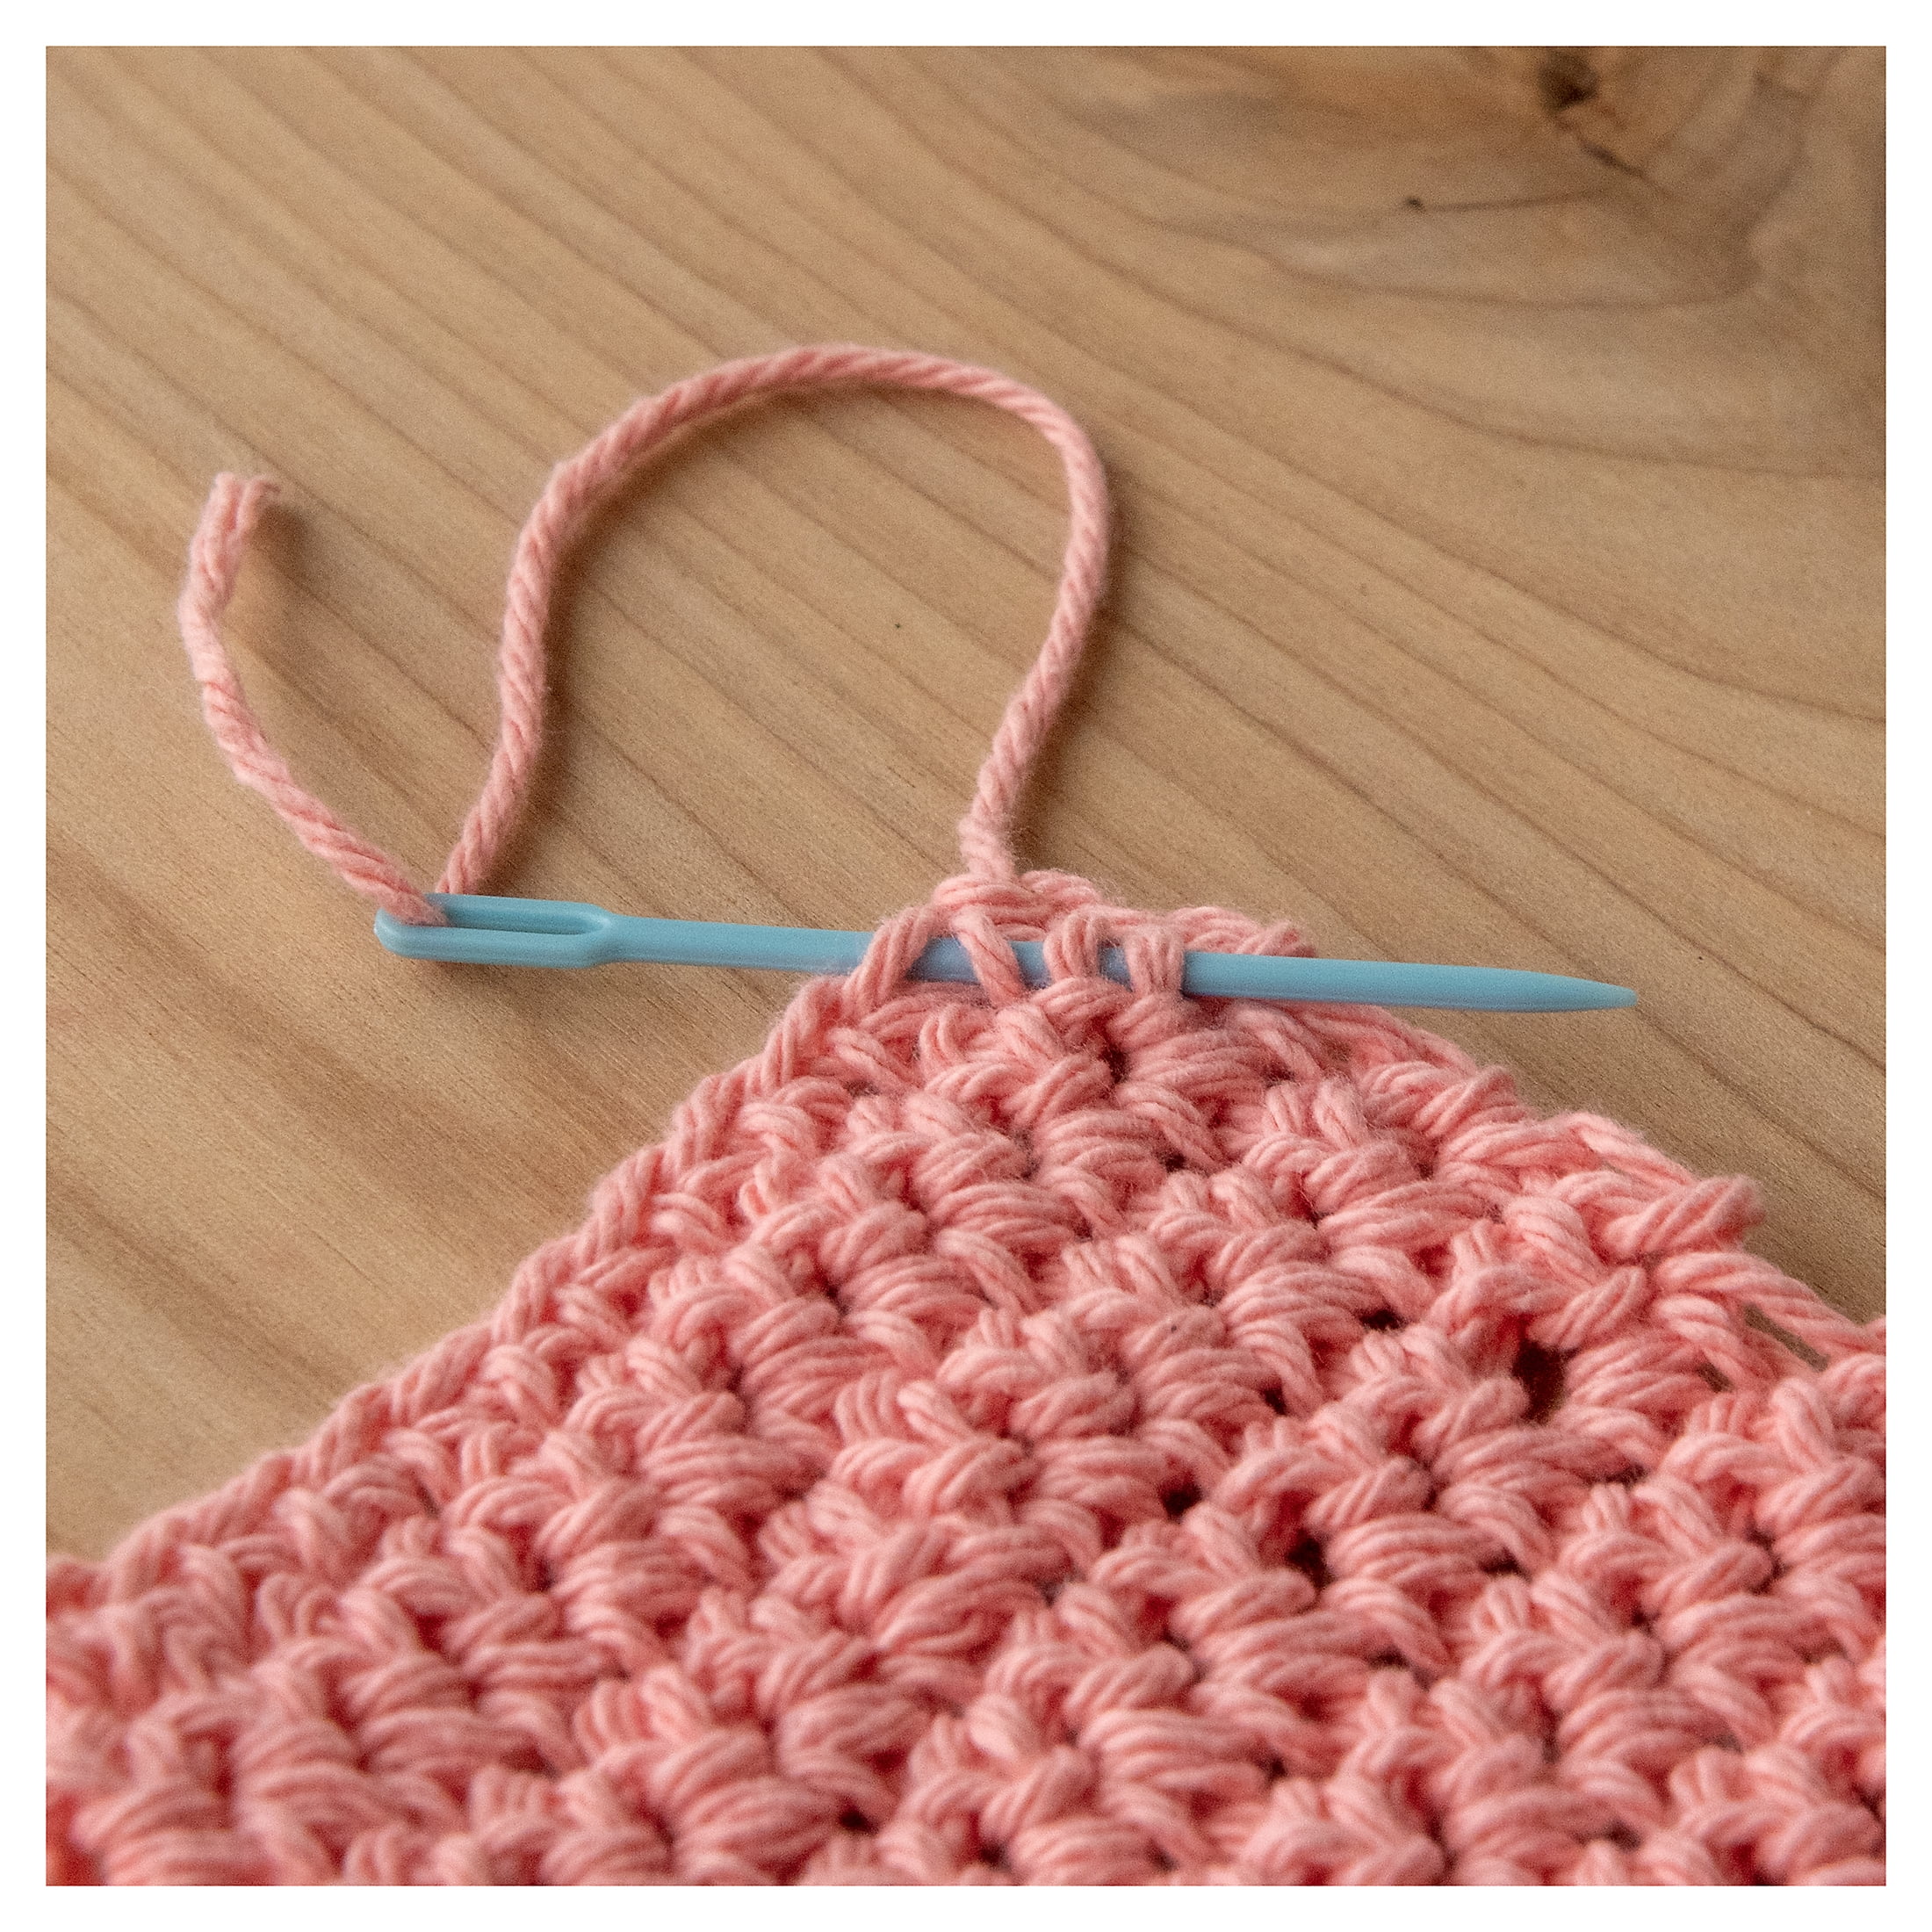 Plastic Yarn Needles, Boye, Lightweight Needles for Weaving in Ends